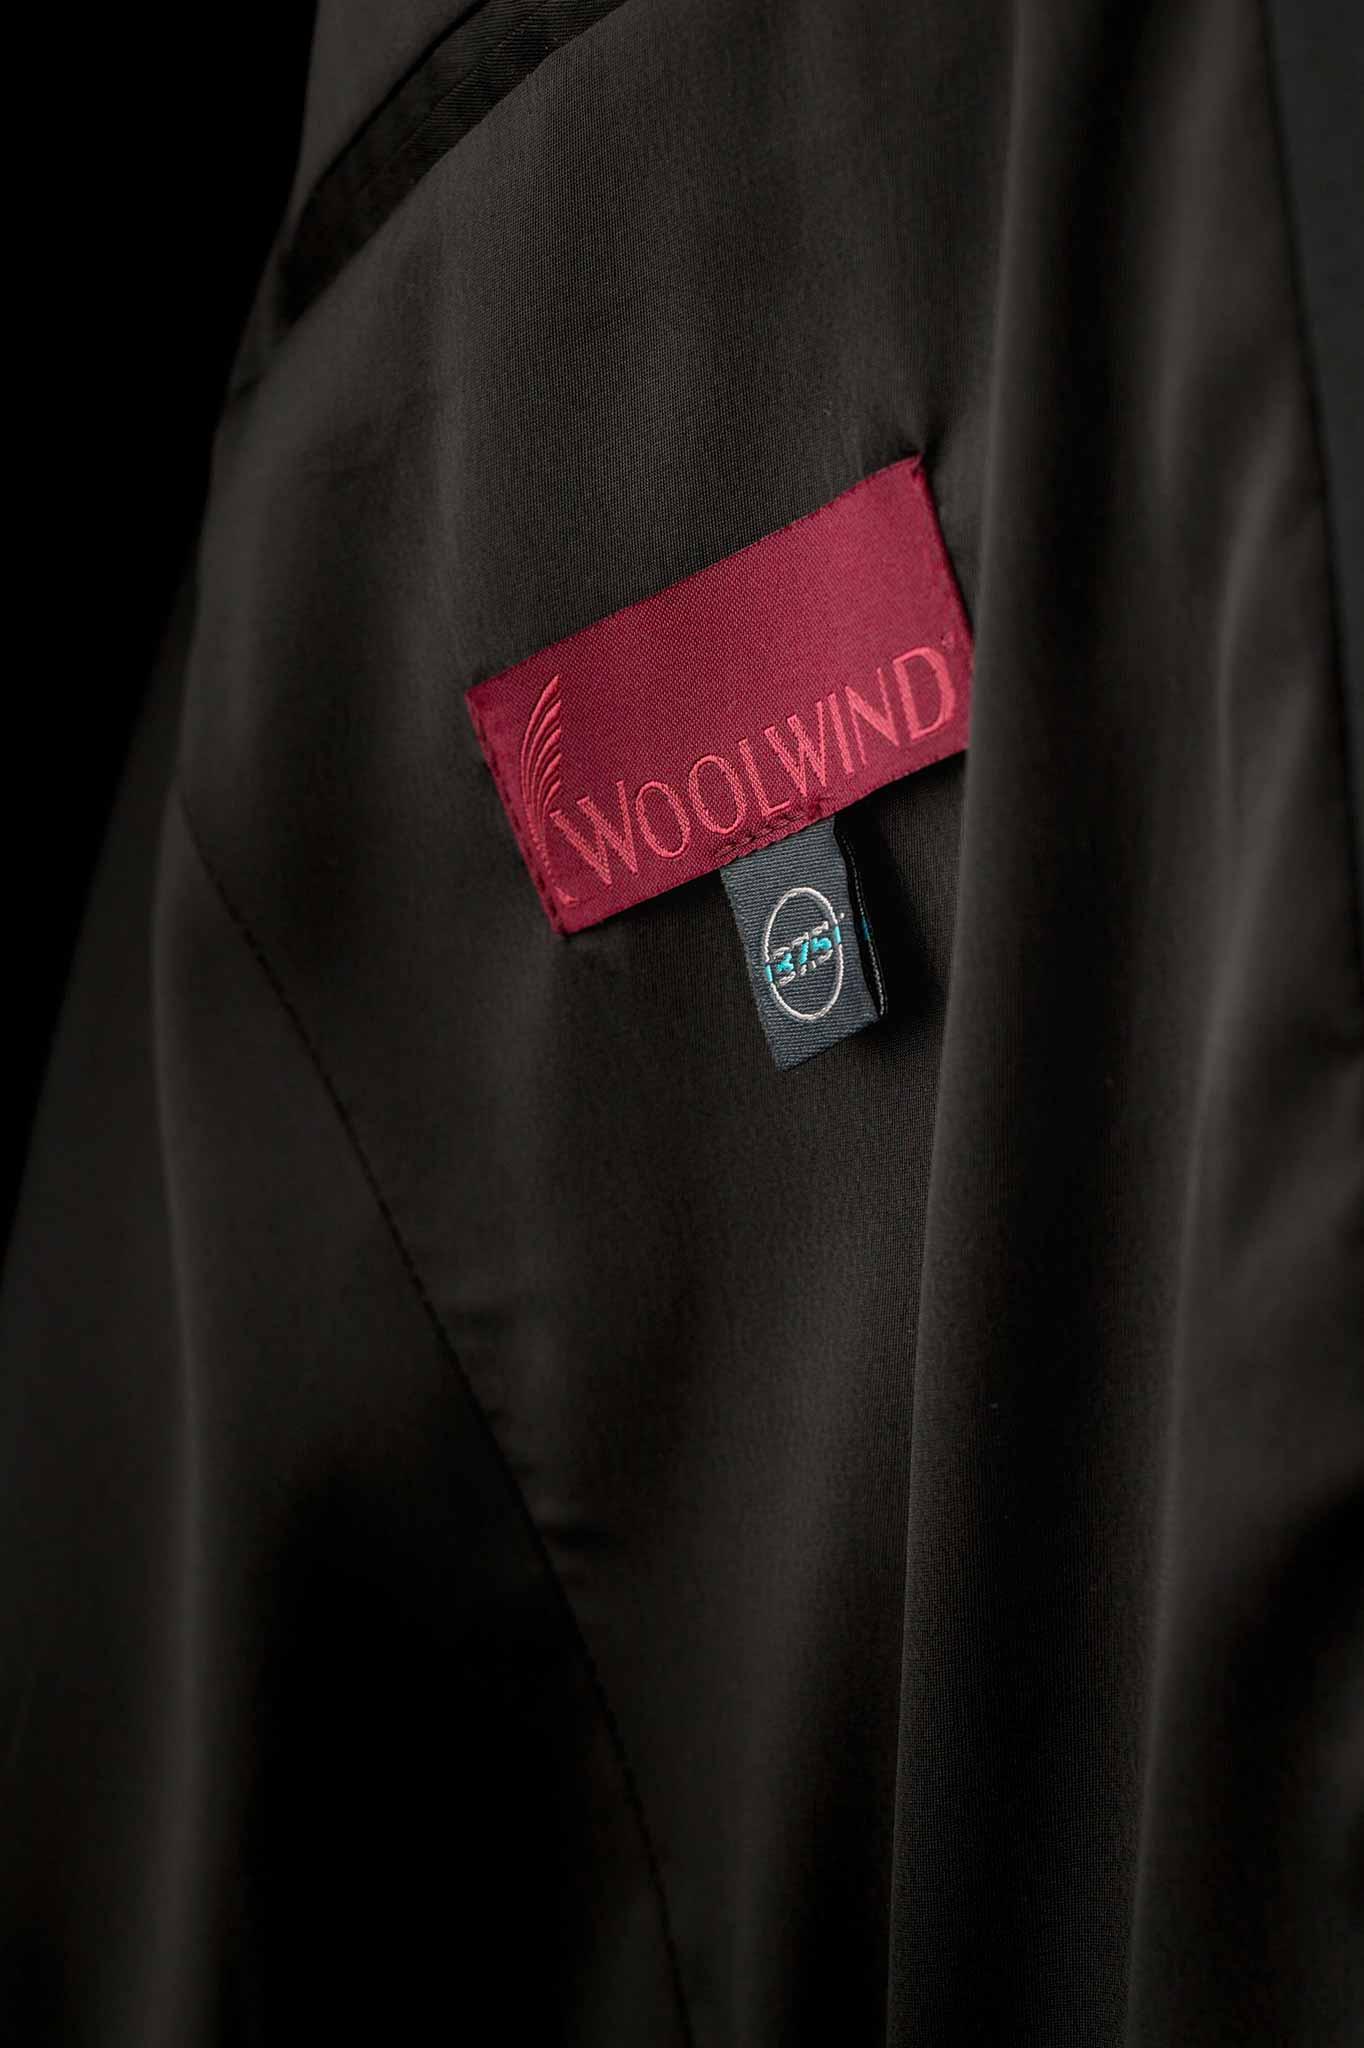 NEW! Woolwind Tailcoat Jacket 2.0 - Woolwind